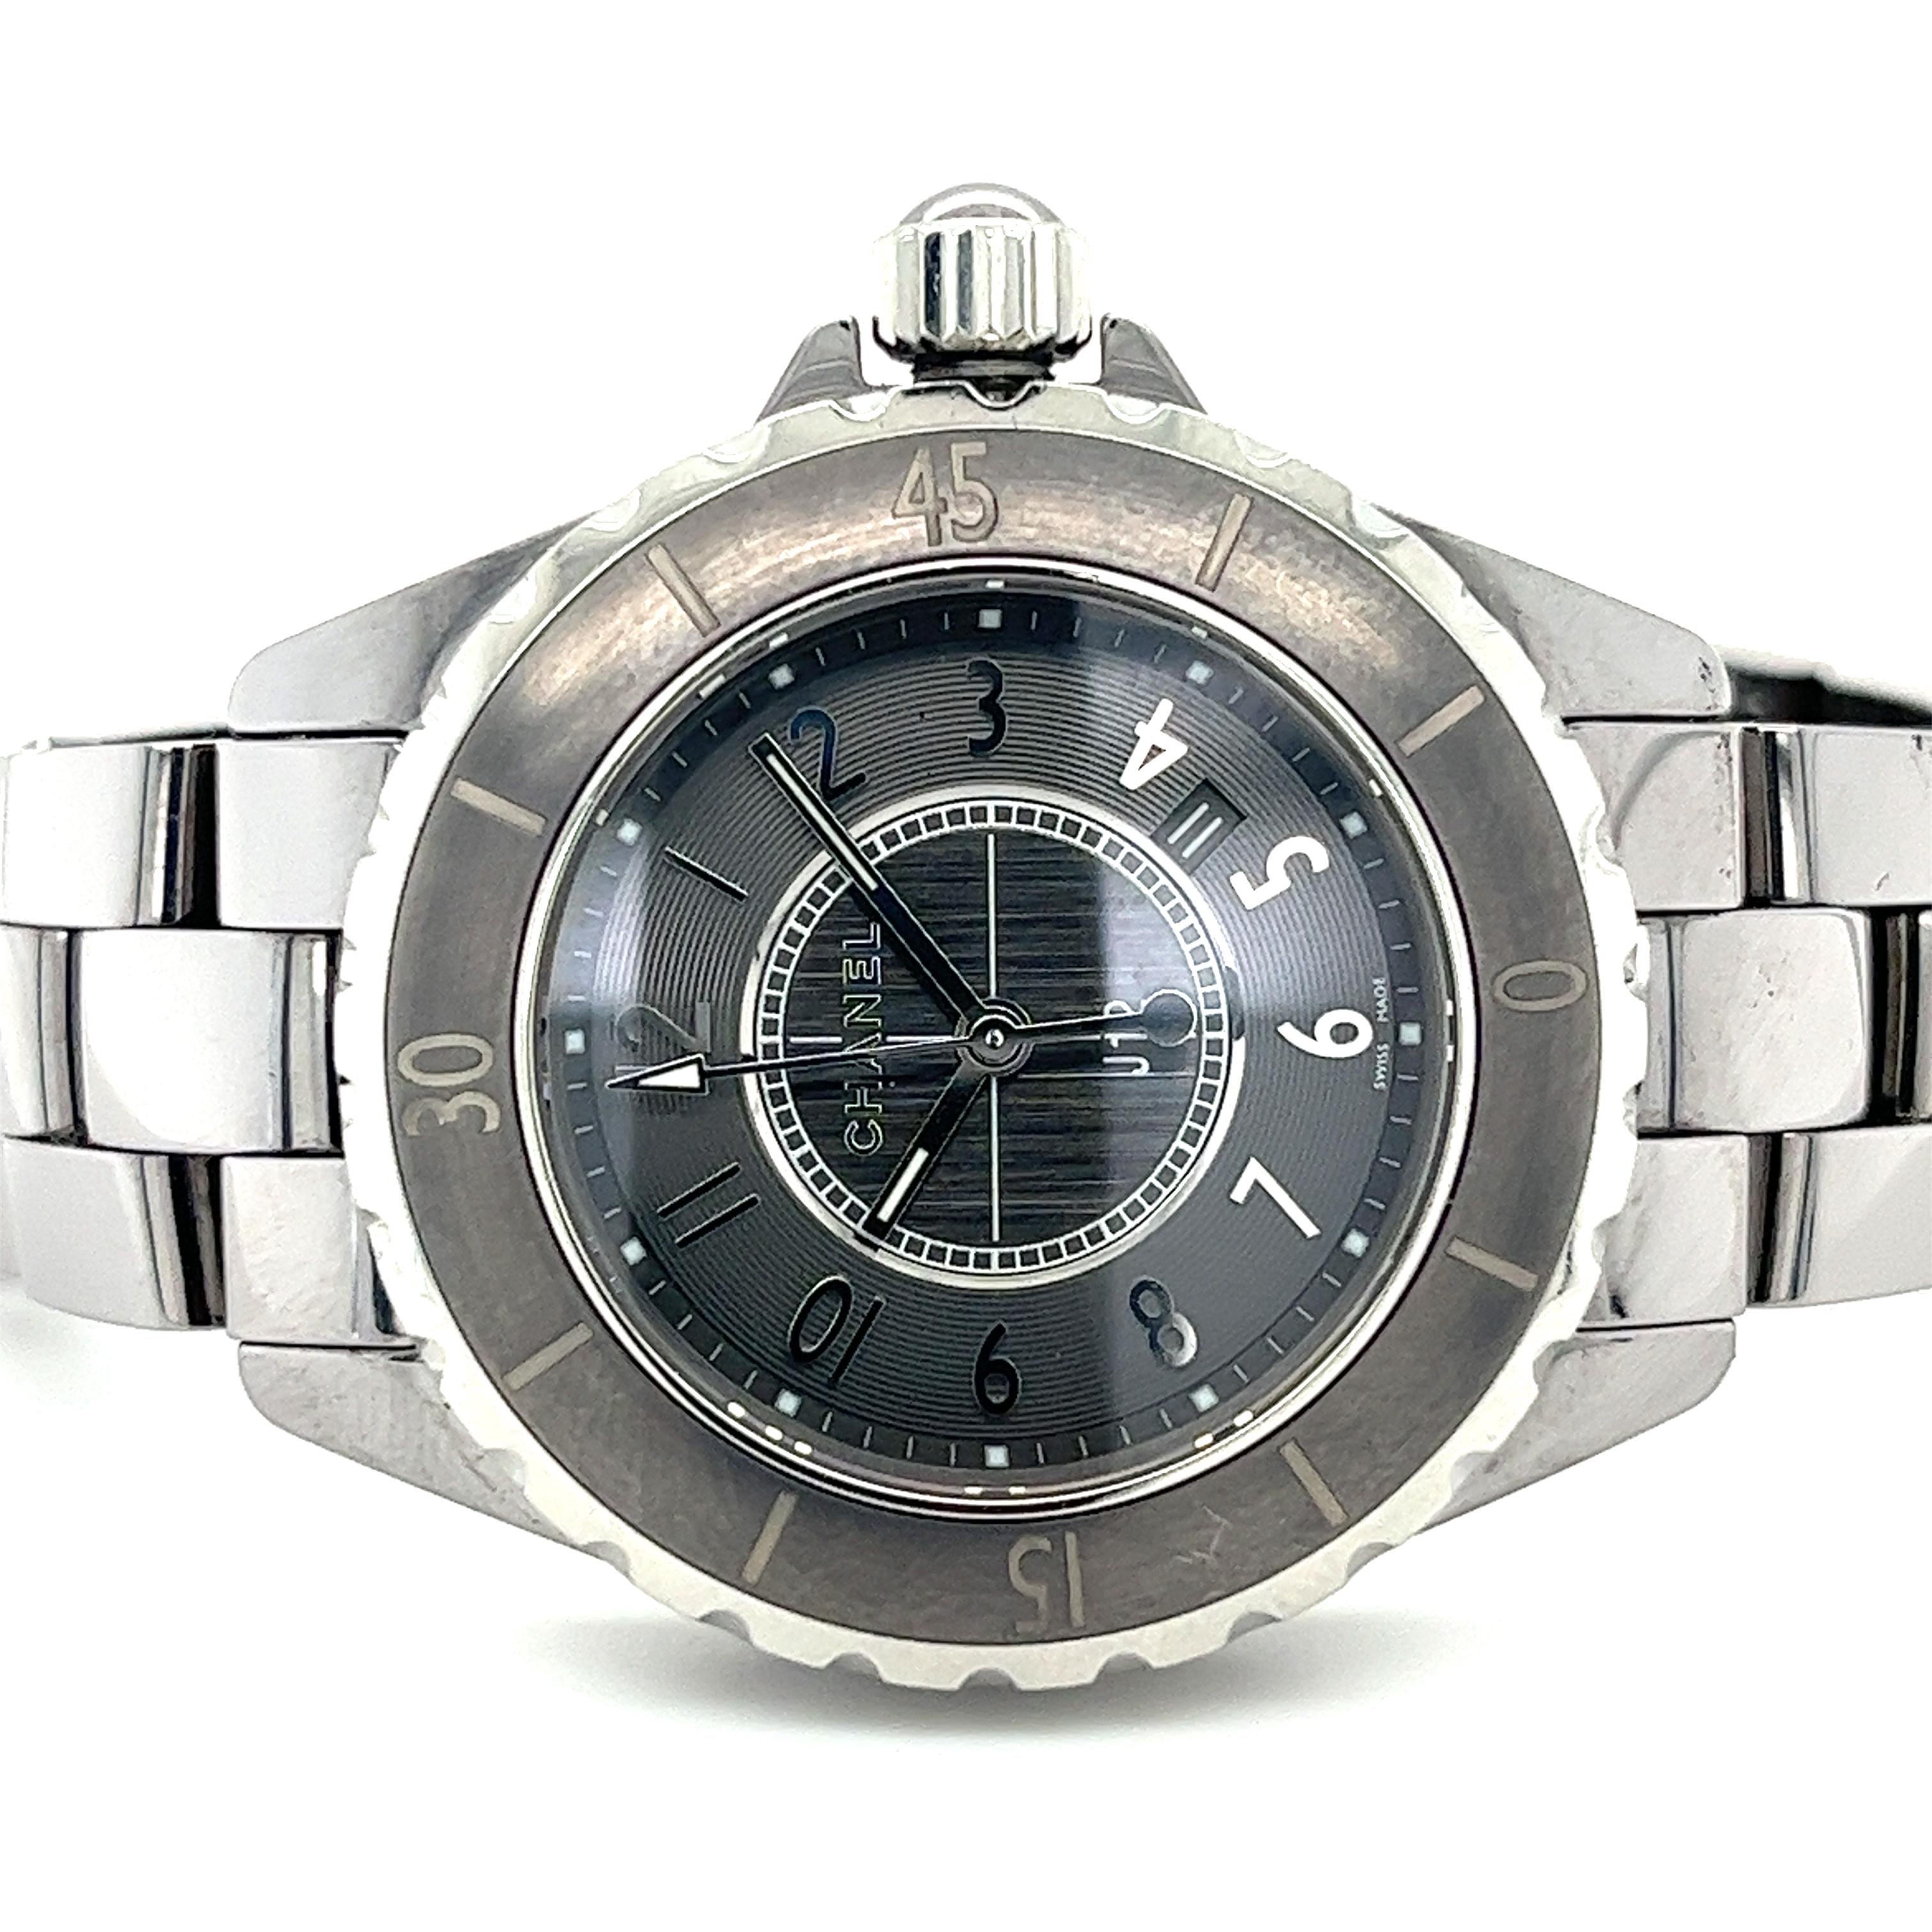 Chanel J12 Quartz Black Ceramic And Stainless Steel 33mm Ladies Wrist Watch with original Chanel watch box. Quartz movement.

- Brand: Chanel
- Gender: Ladies - Model: J12
- Model Number: H0682
- Swiss Made
- Movement: Quartz
- Case Diameter: 33